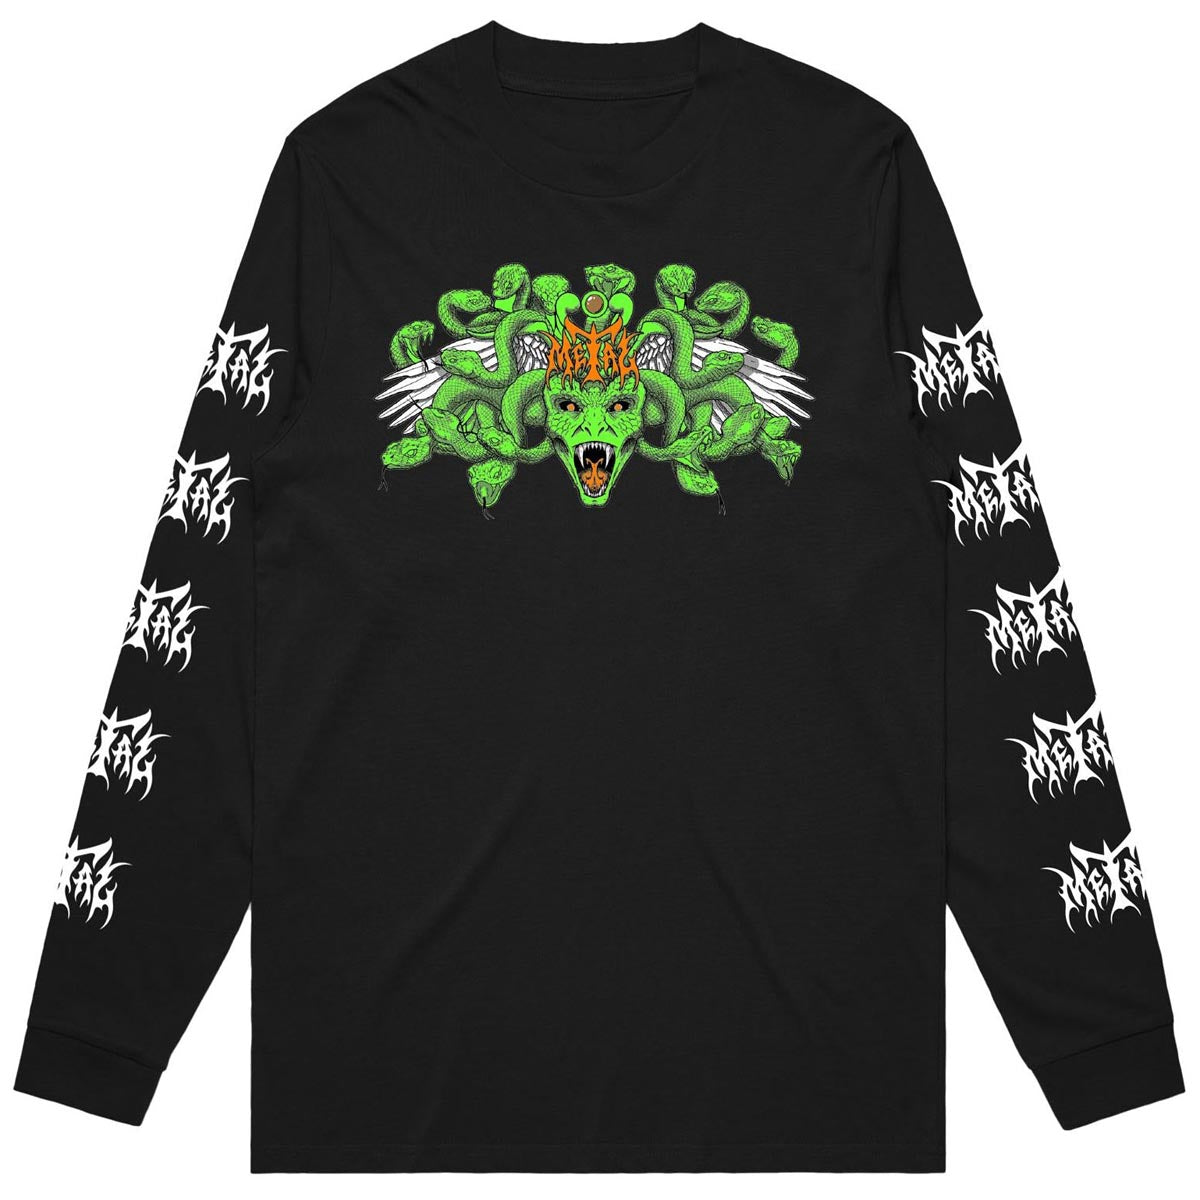 Metal Medusa Long Sleeve T-Shirt - Black image 1